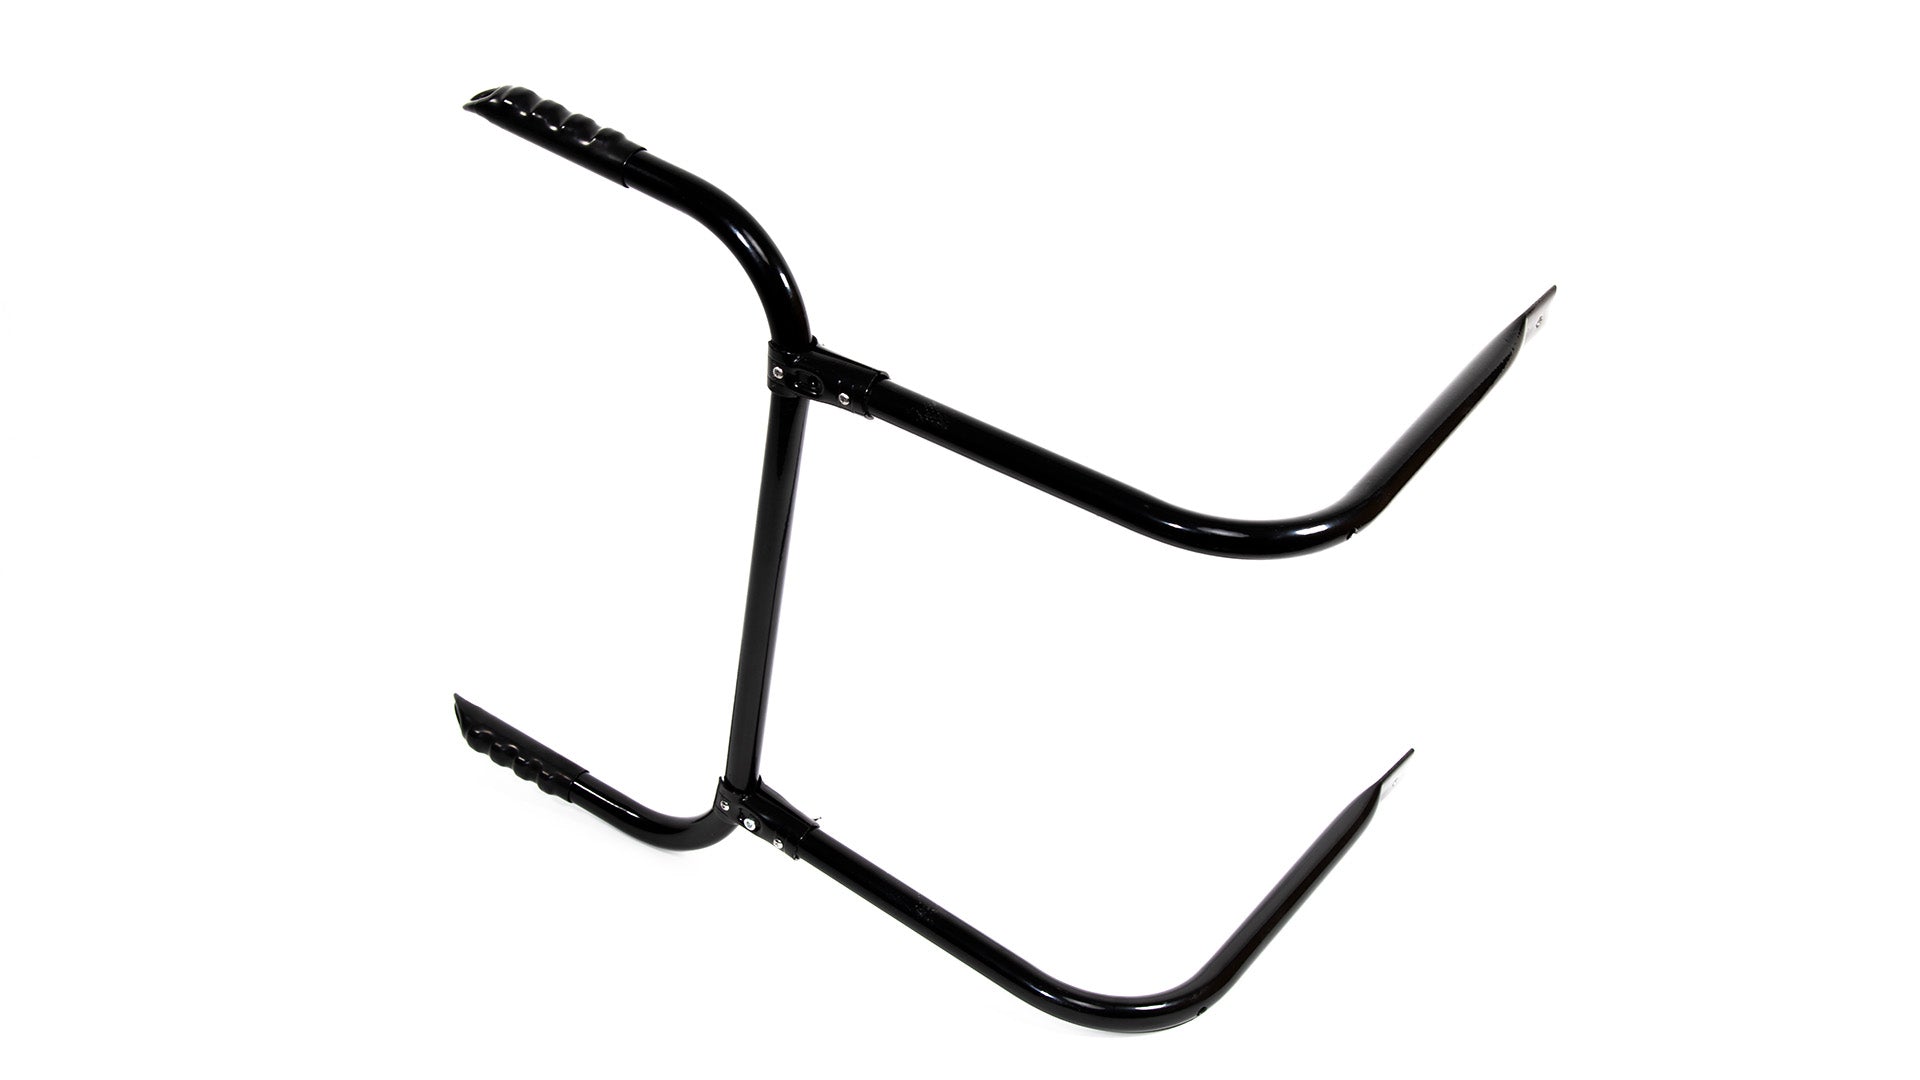 A black metal frame with black handles